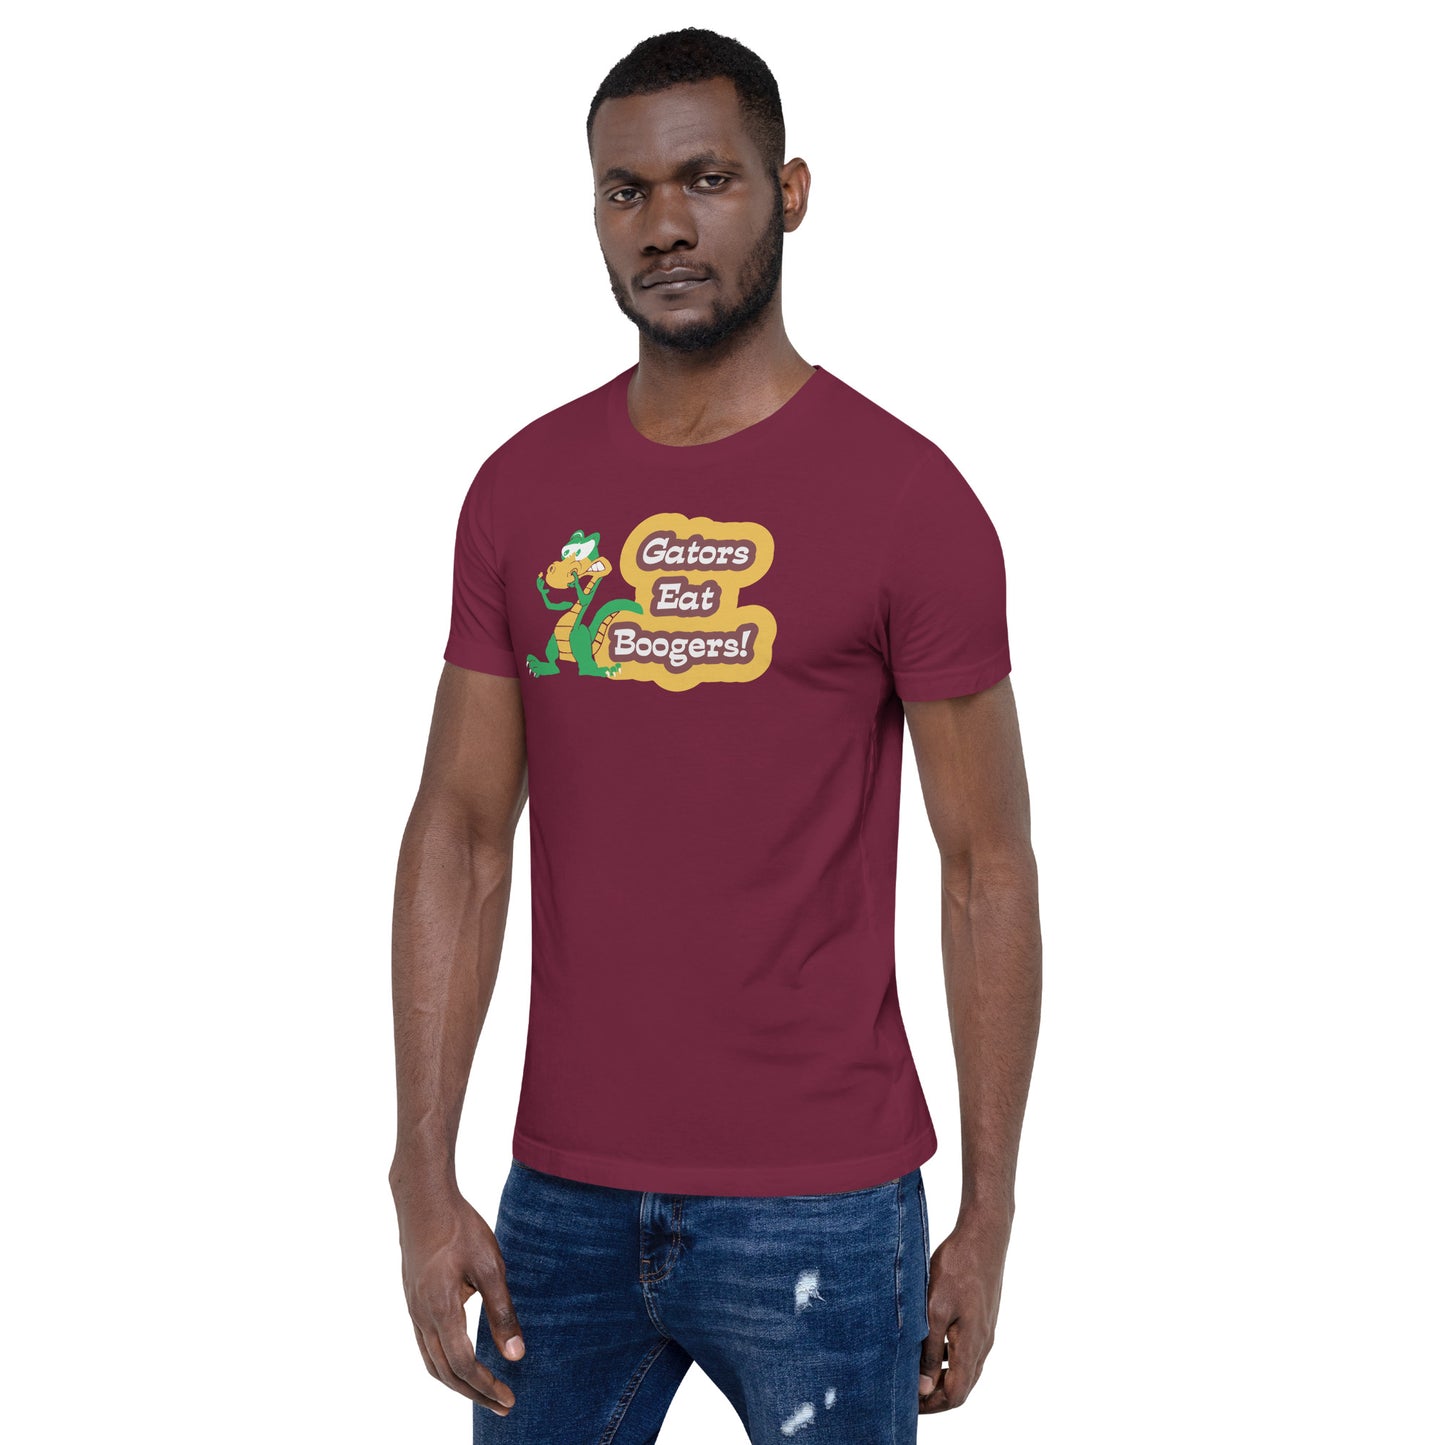 Gators Eat Boogers Garnet&Gold Logo Unisex t-shirt Plus Sizes